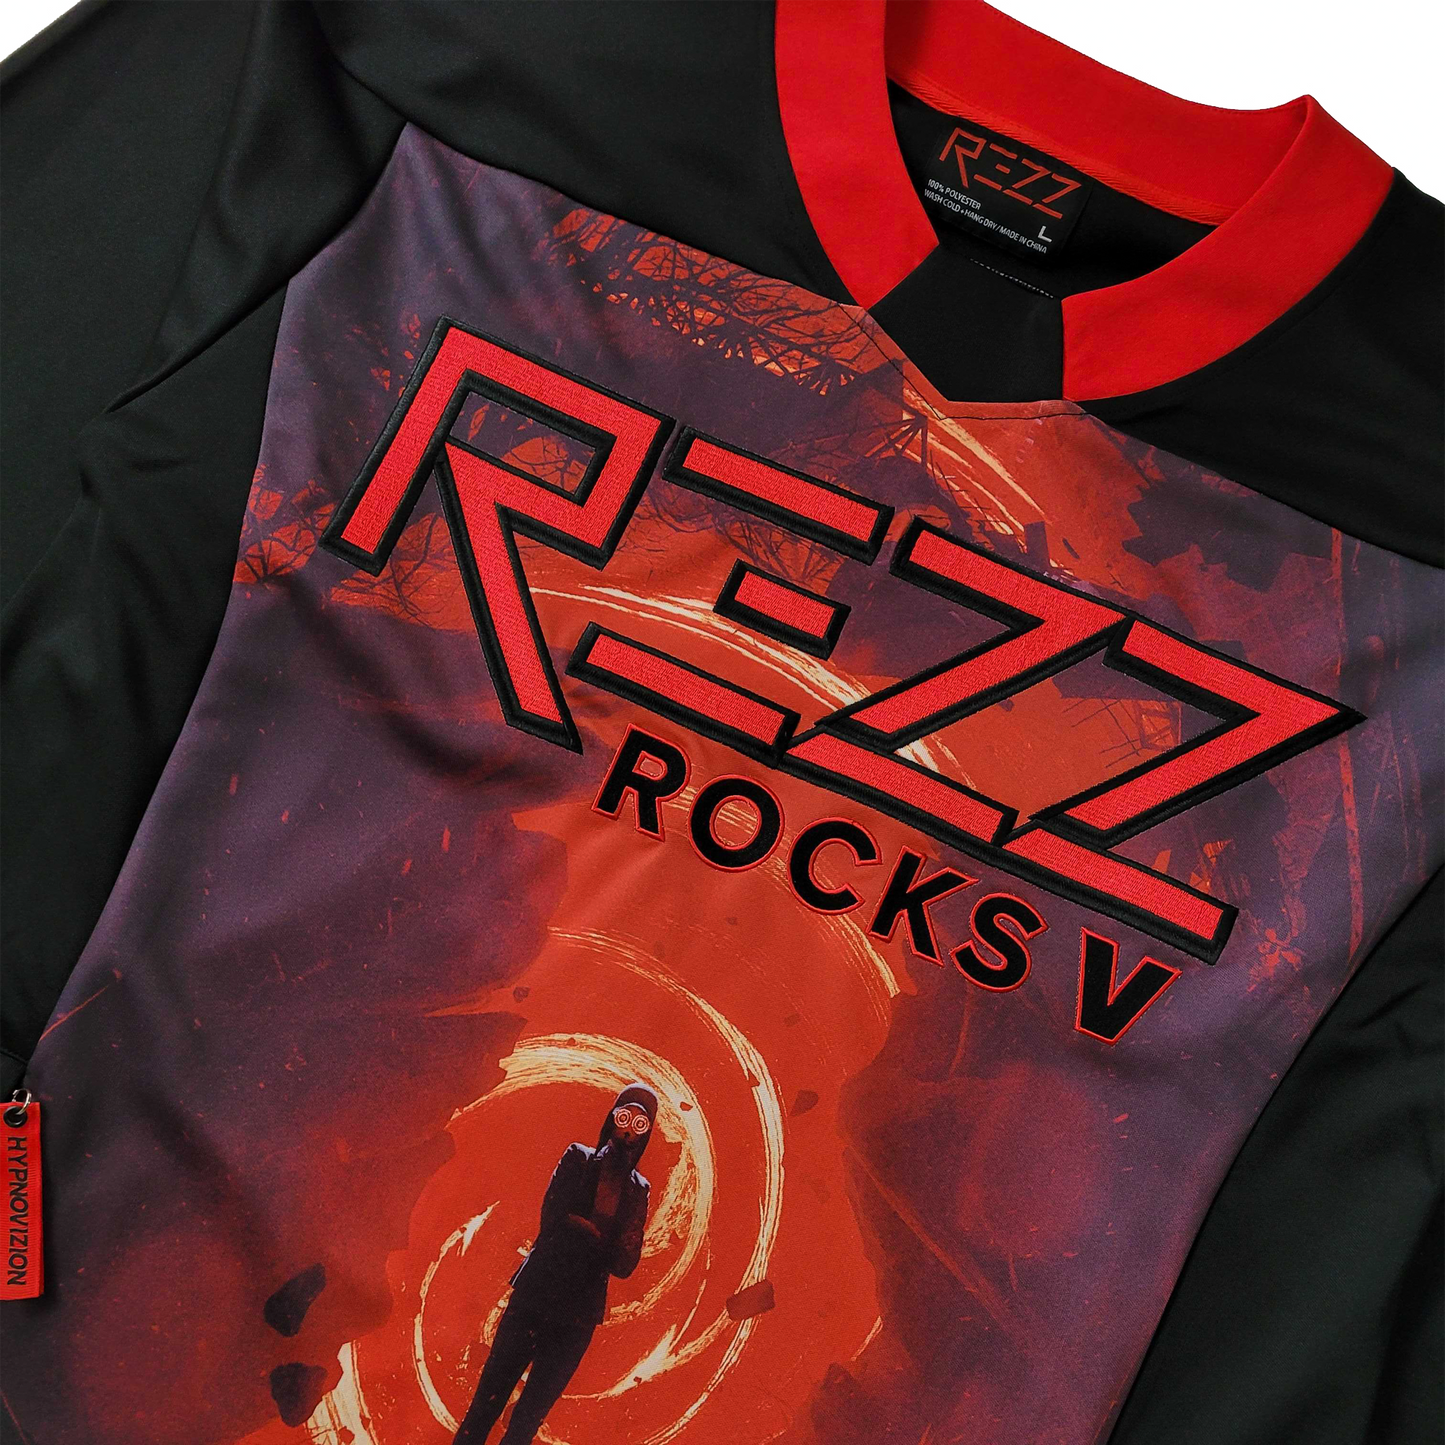 REZZ - Rezz Rocks V Hockey Jersey